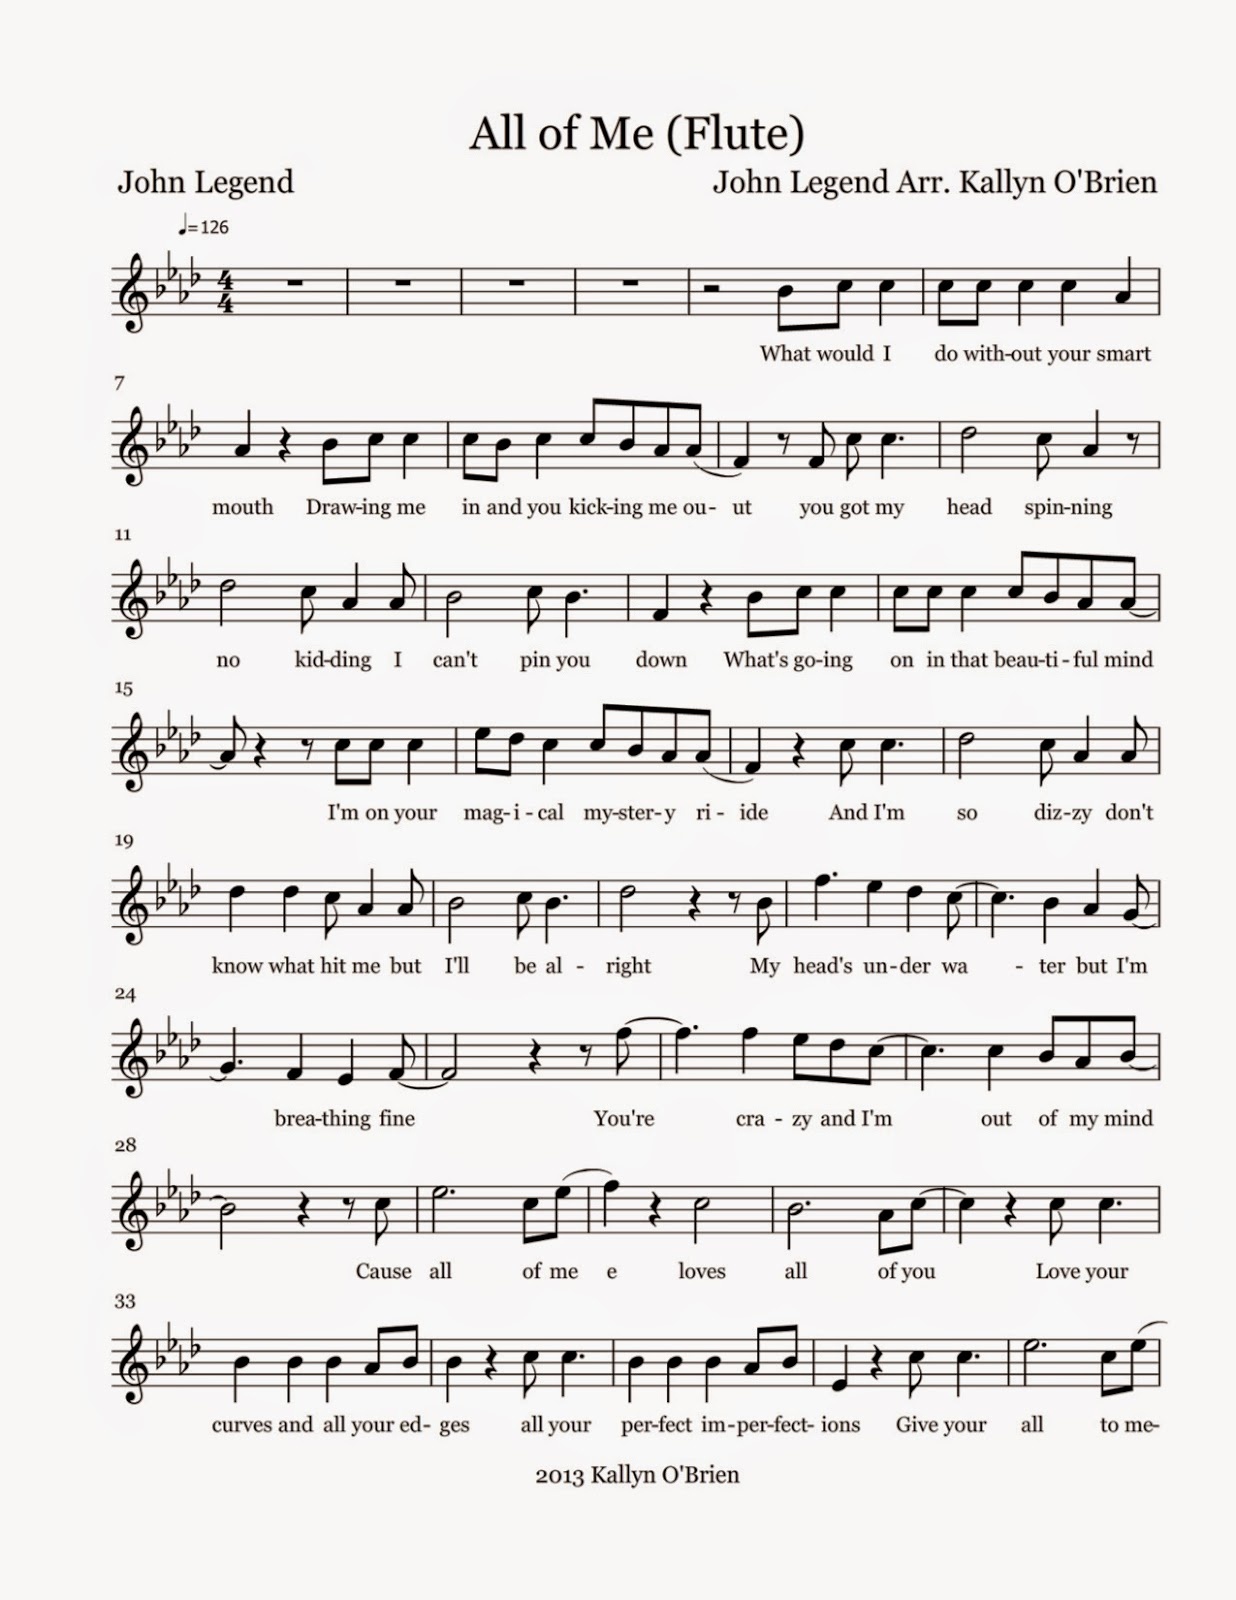 Flute Sheet Music: All Of Me - Sheet Music - Dynamite Piano Sheet Music Free Printable